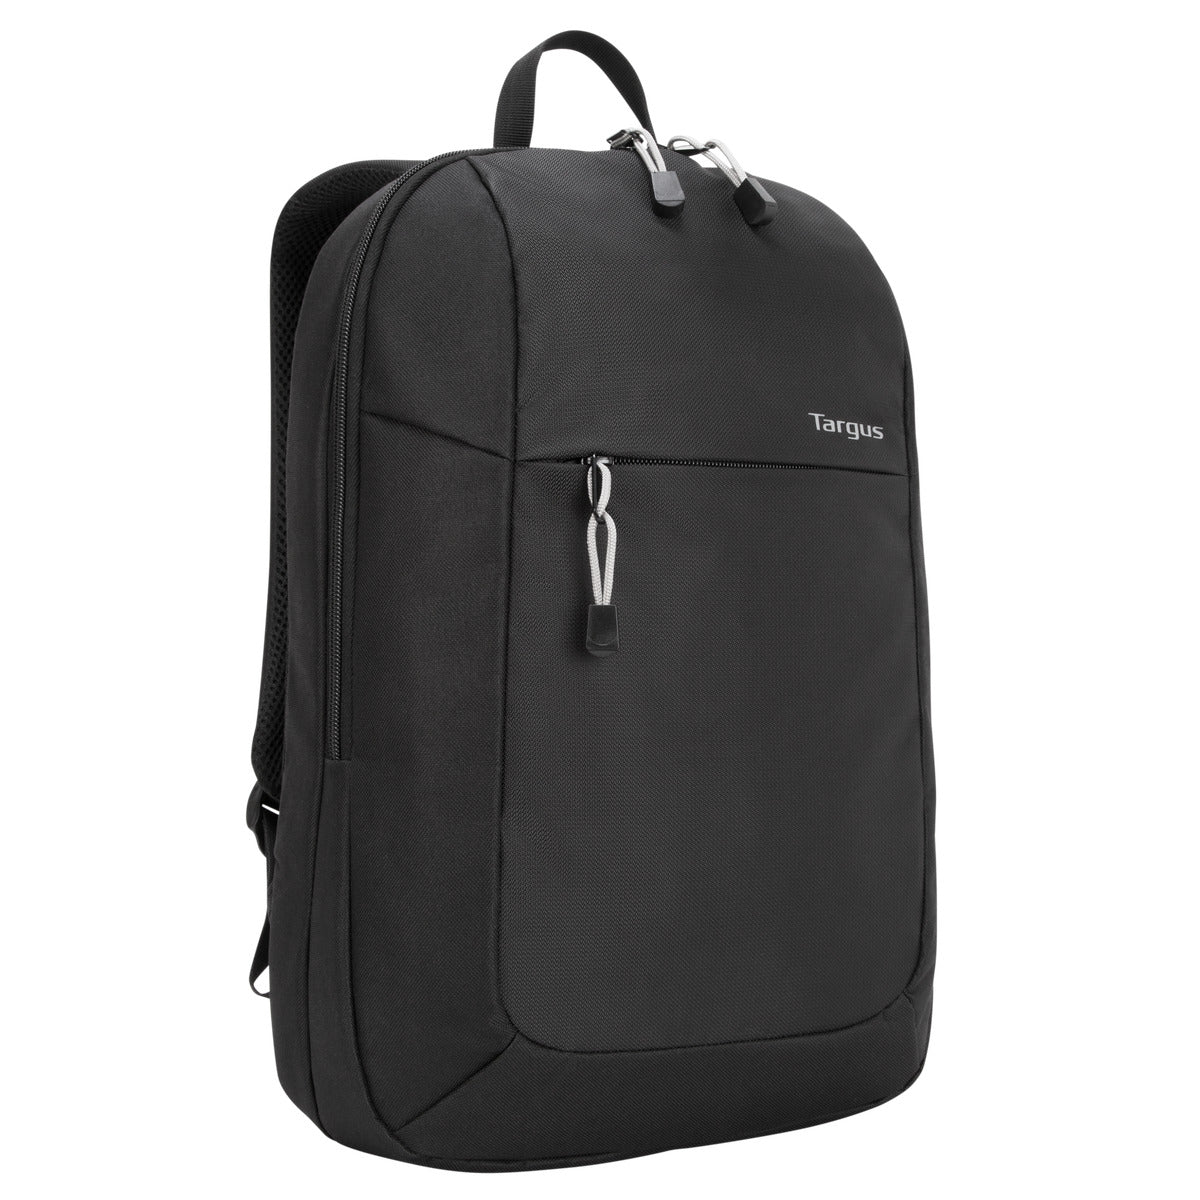 (Black) Targus 15.6-inch Laptop Intellect Advanced | Backpack